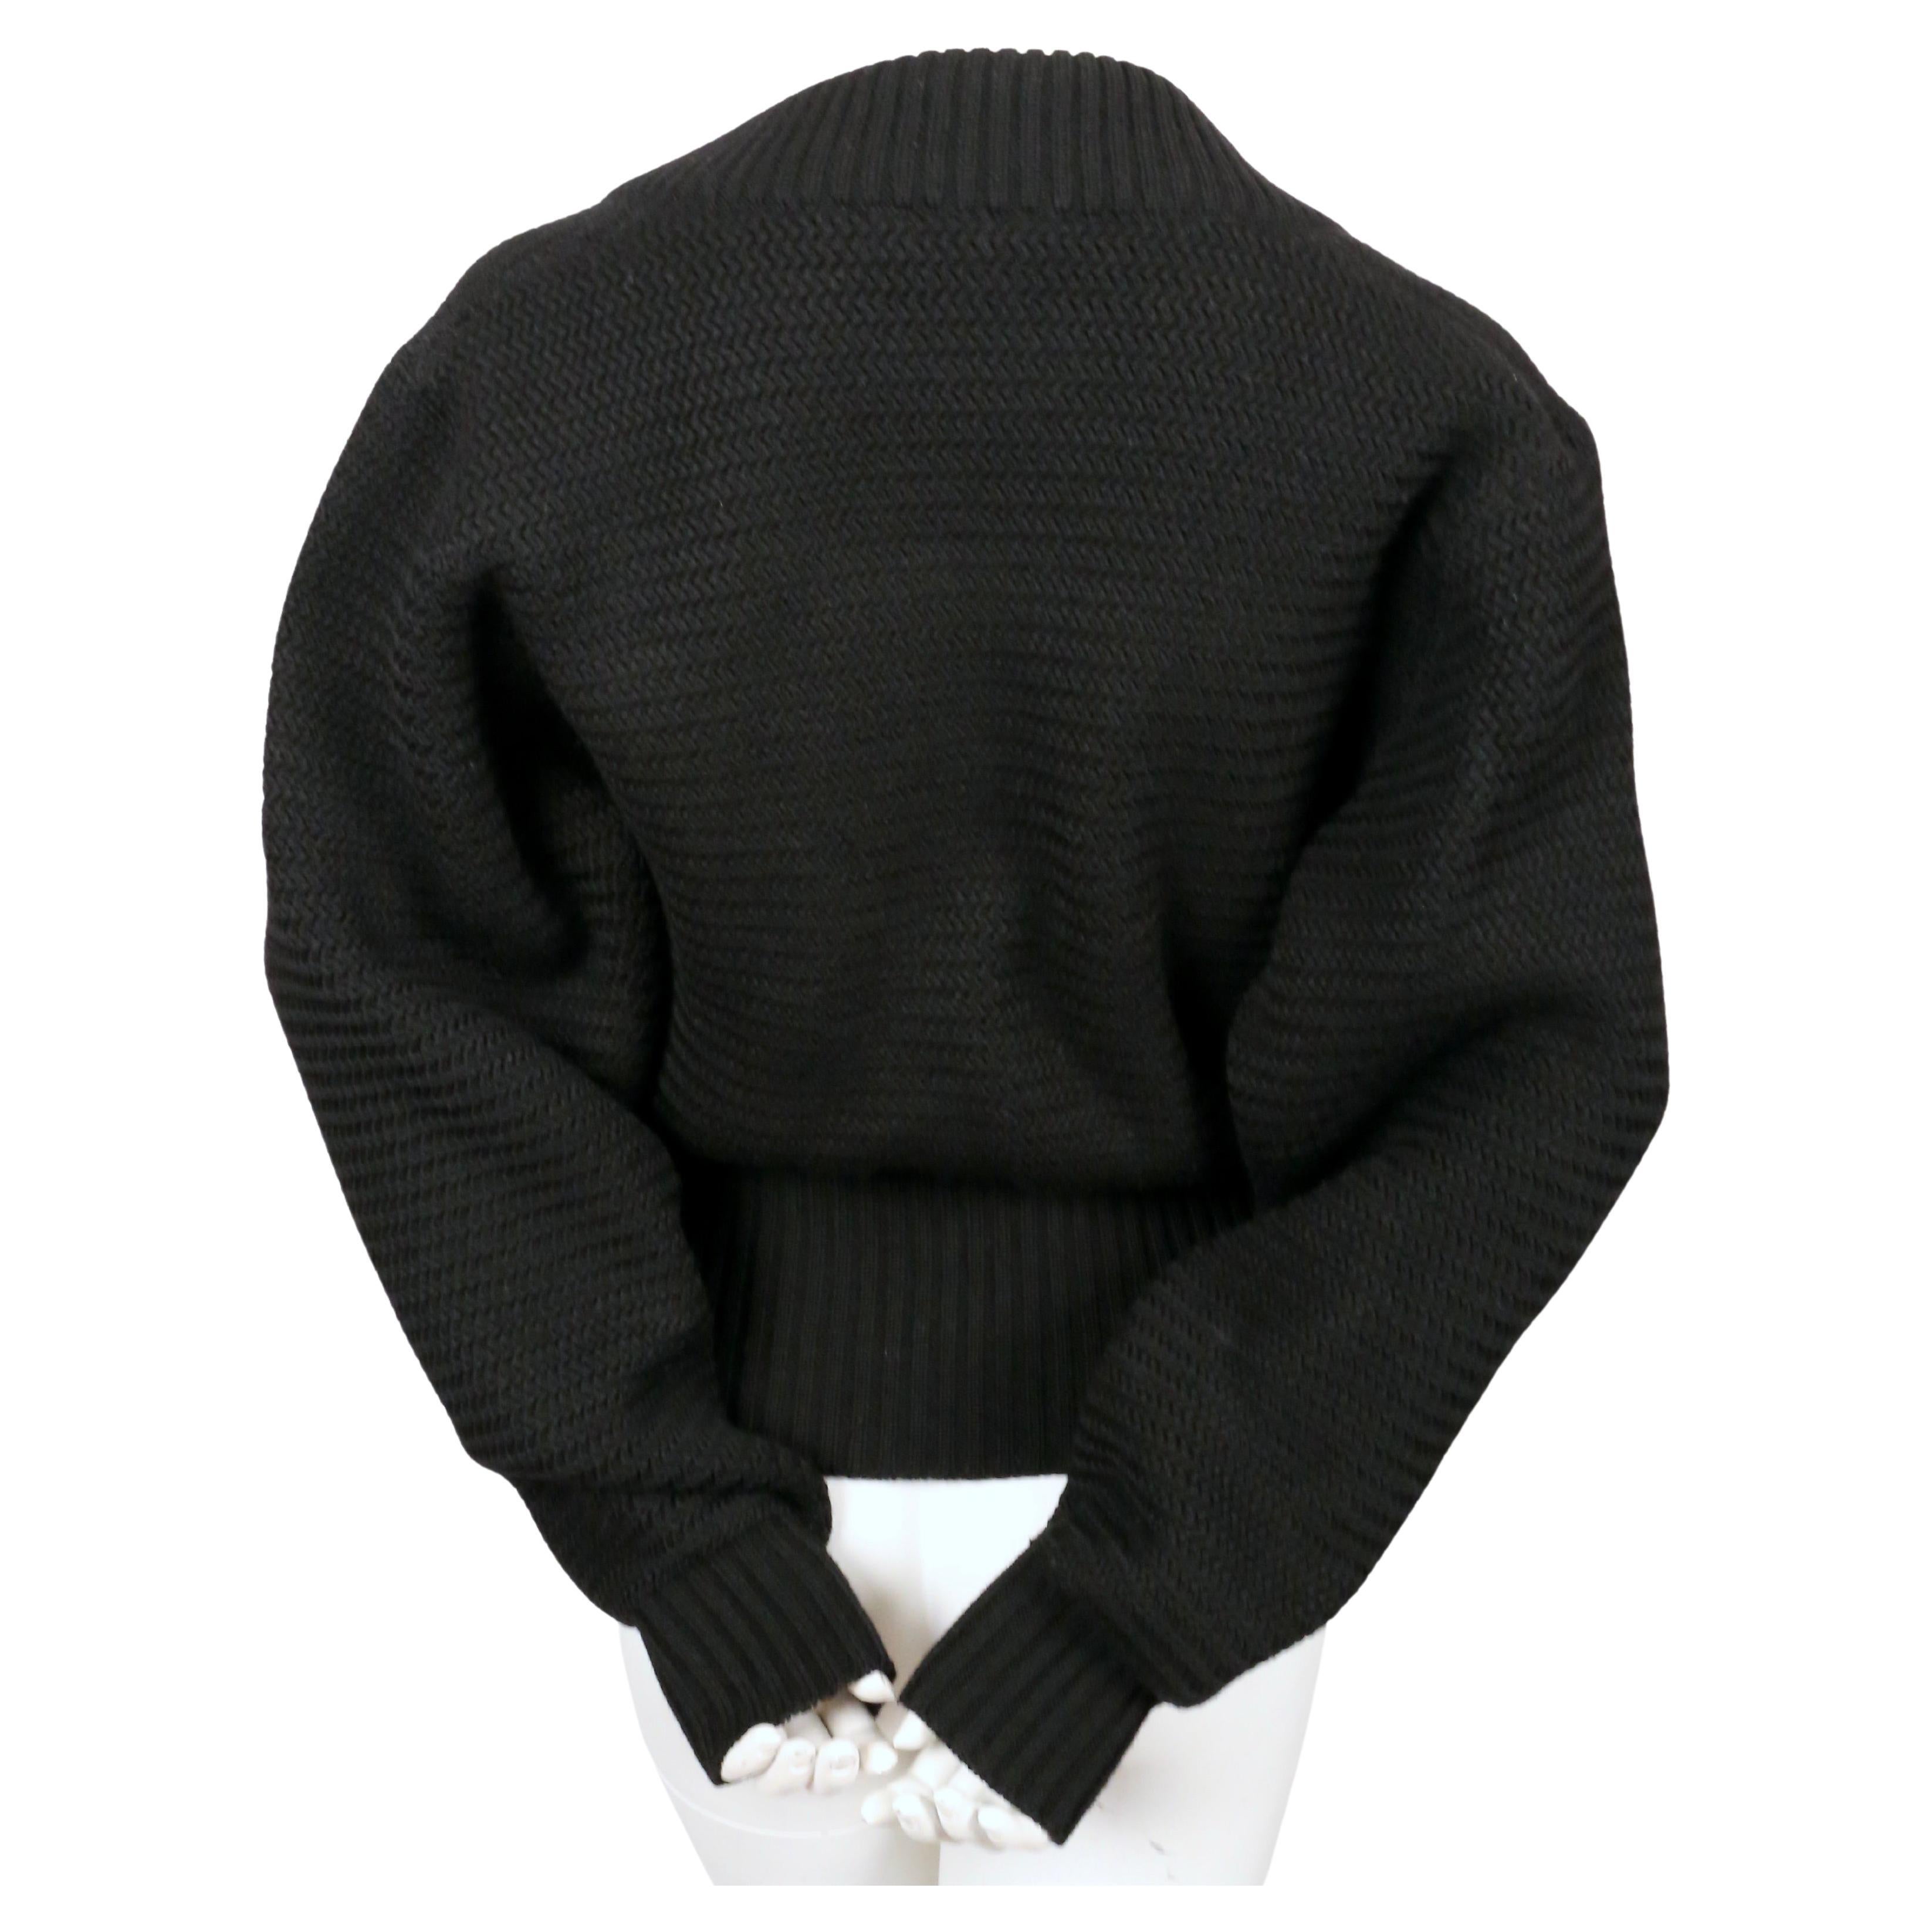 1986 AZZEDINE ALAIA heavy knit black RUNWAY cardigan sweater coat with zippers 1